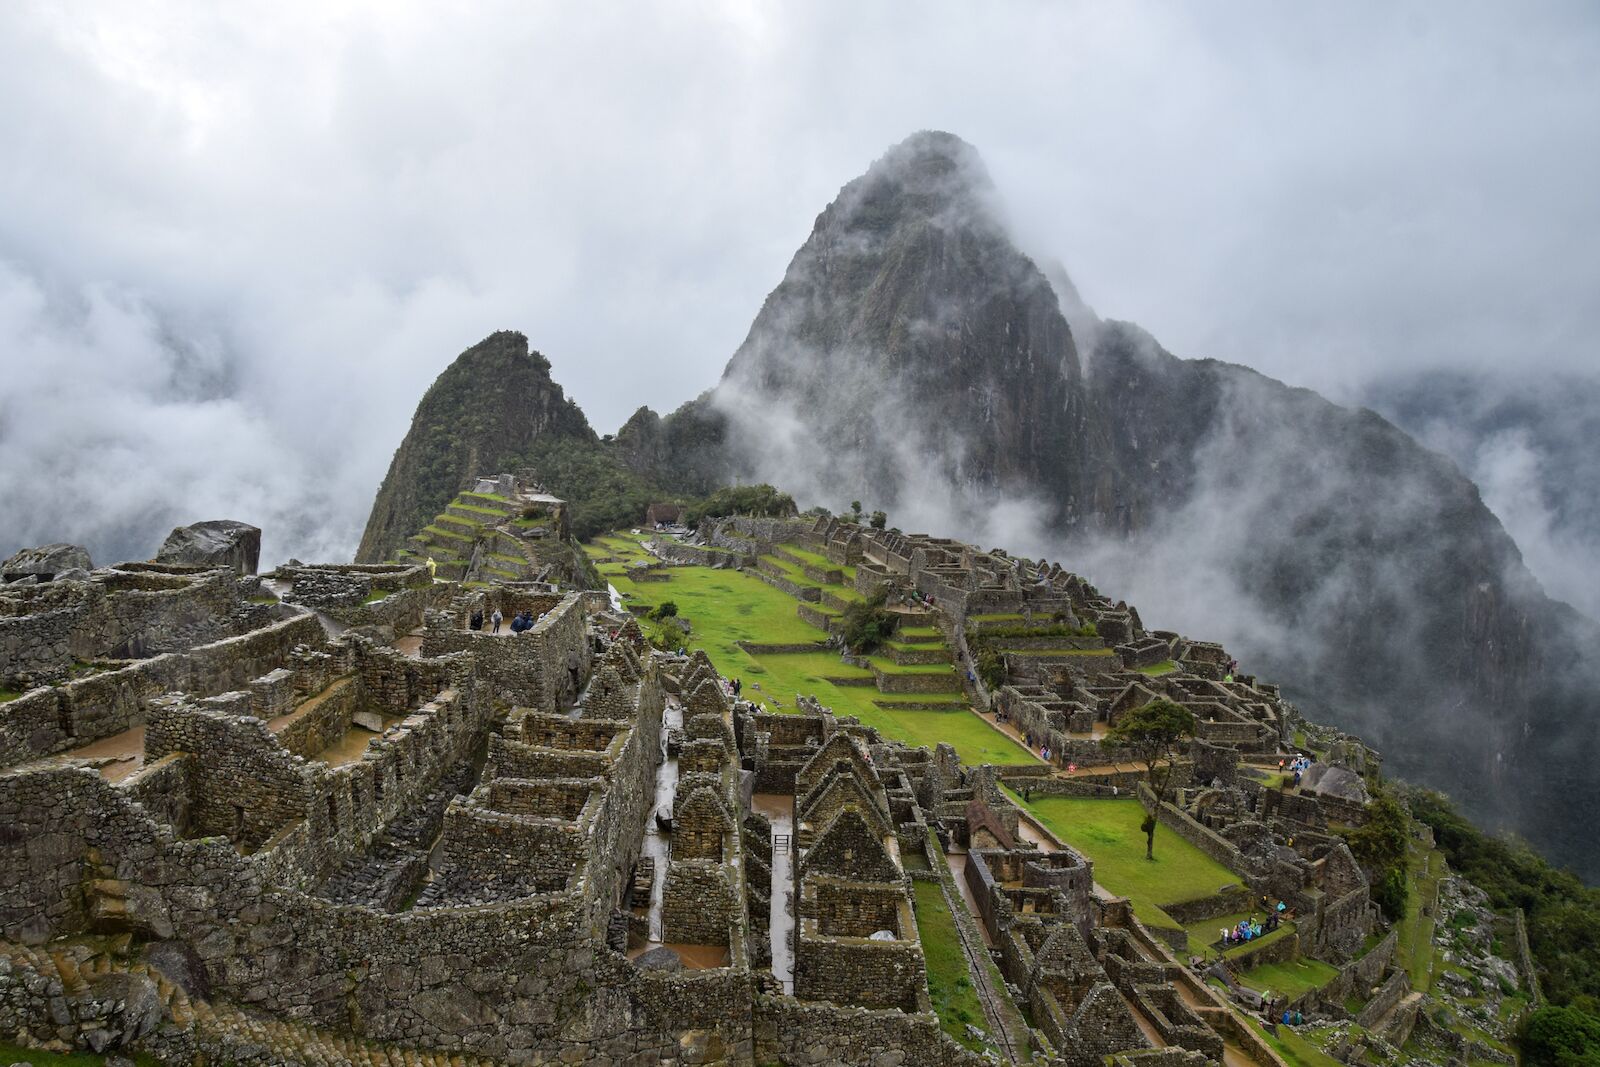 Machu Picchu, end point of the Inca Train